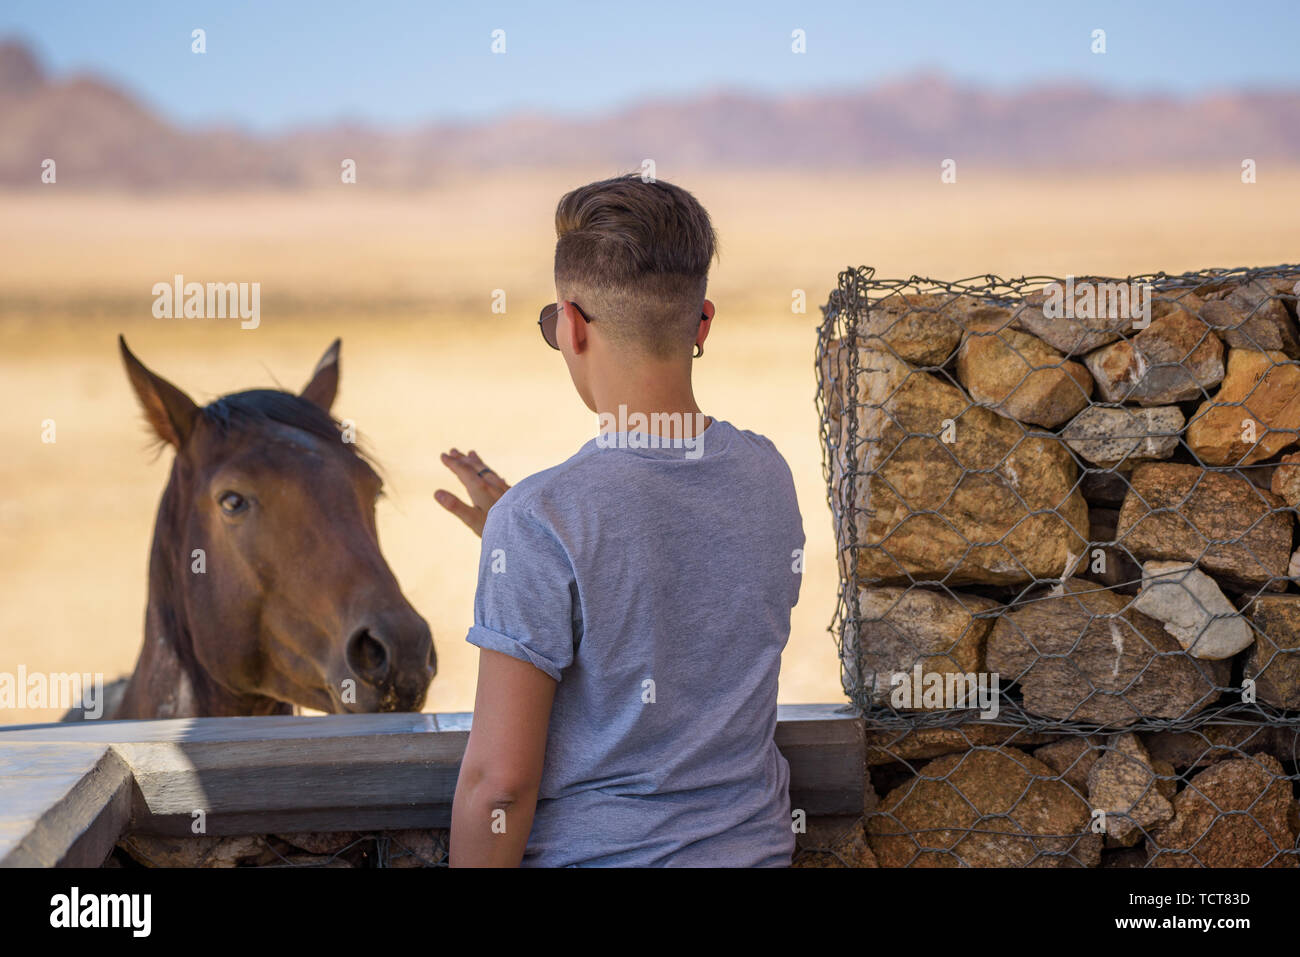 Woman trying to pet a wild horse in the Namib desert near Luderitz, Namibia Stock Photo